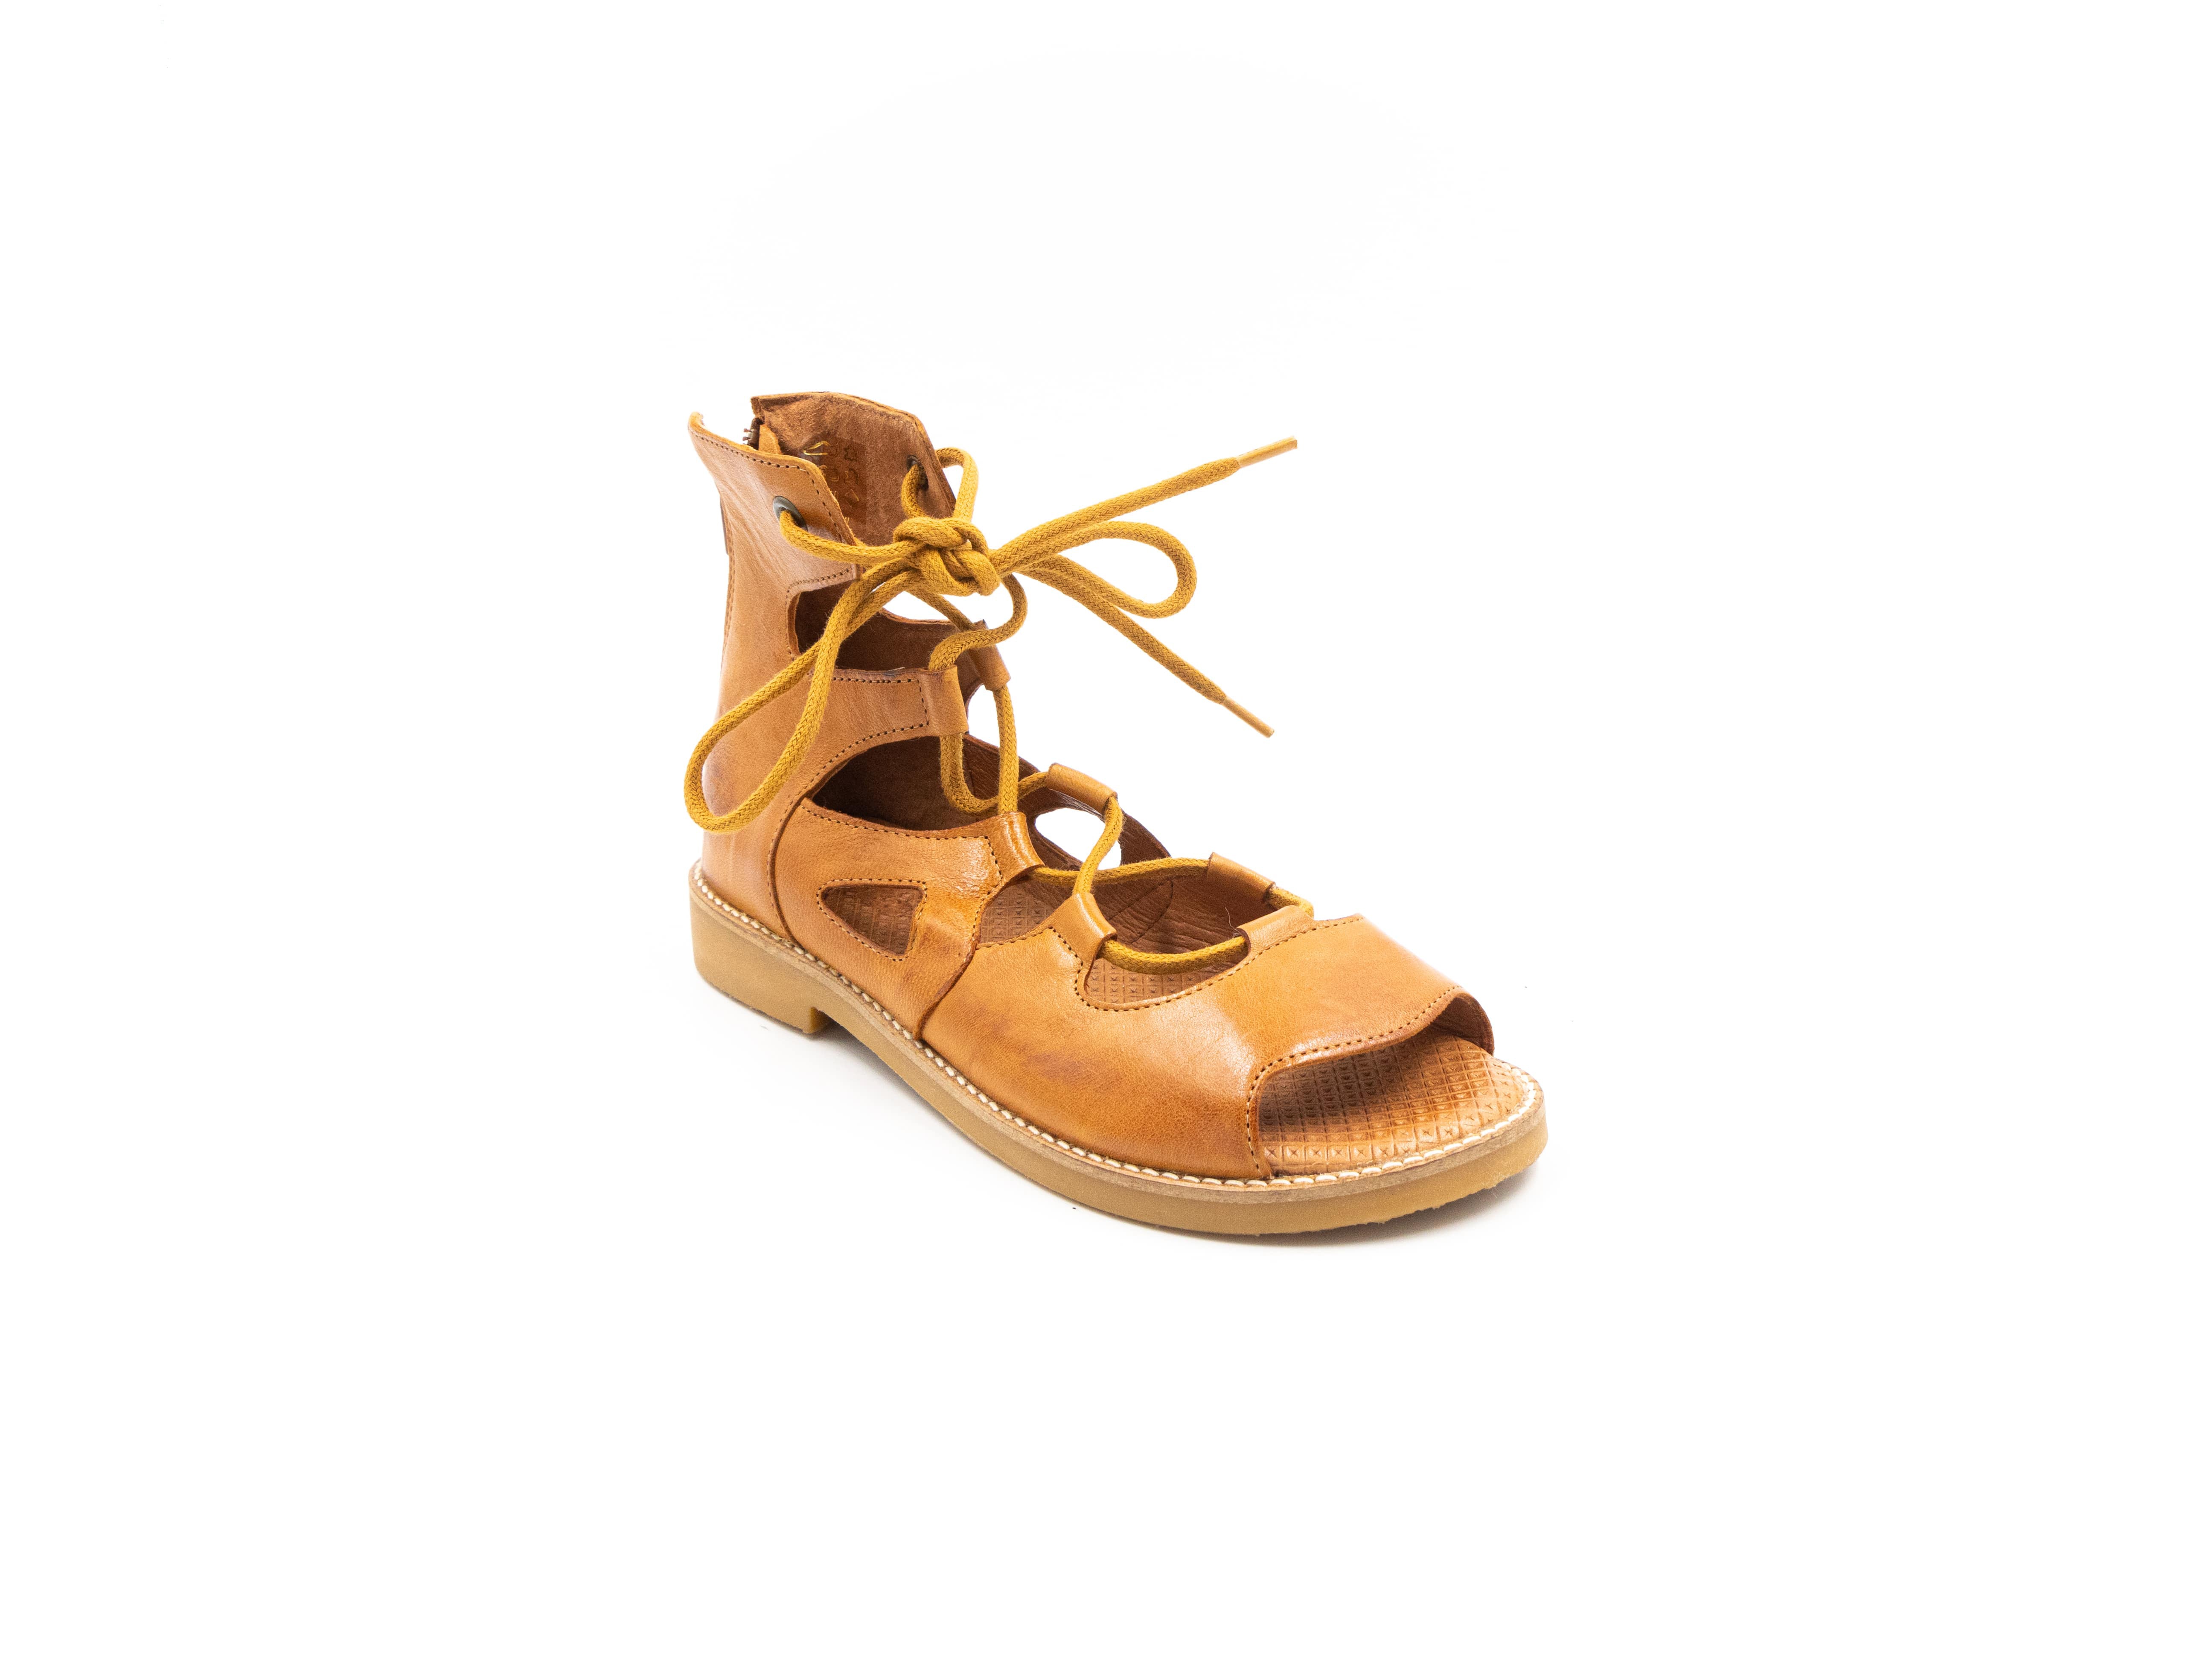 Roman-style sandals in cognac tones.